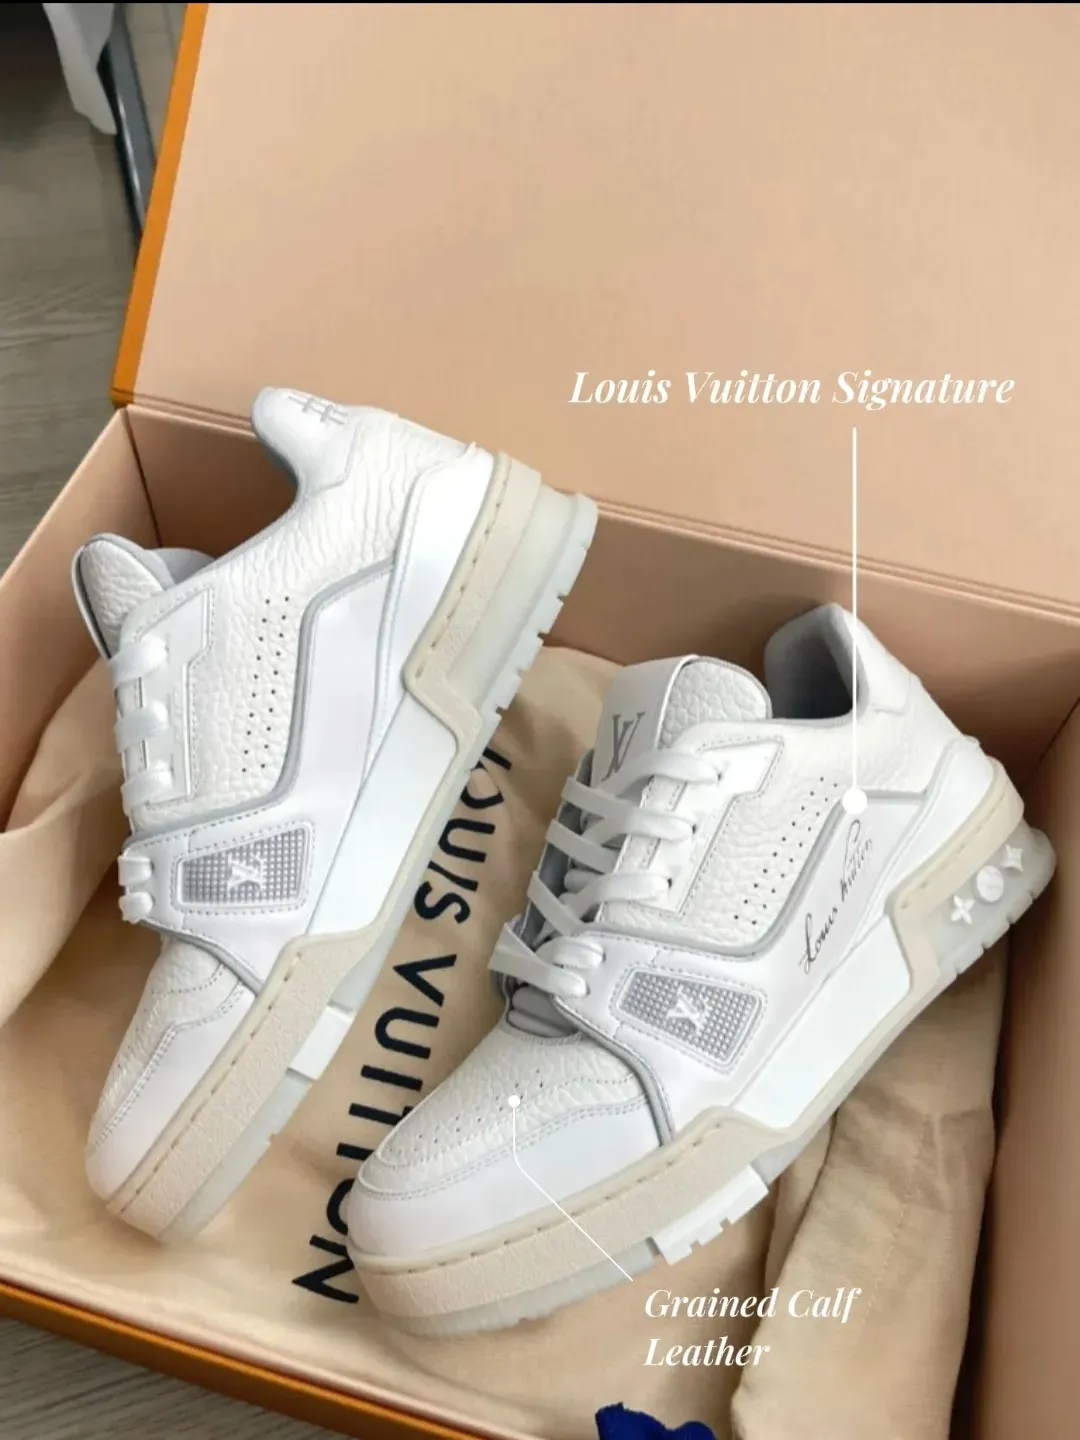 LOUIS VUITTON TRAINER MAXI - shoes lovers